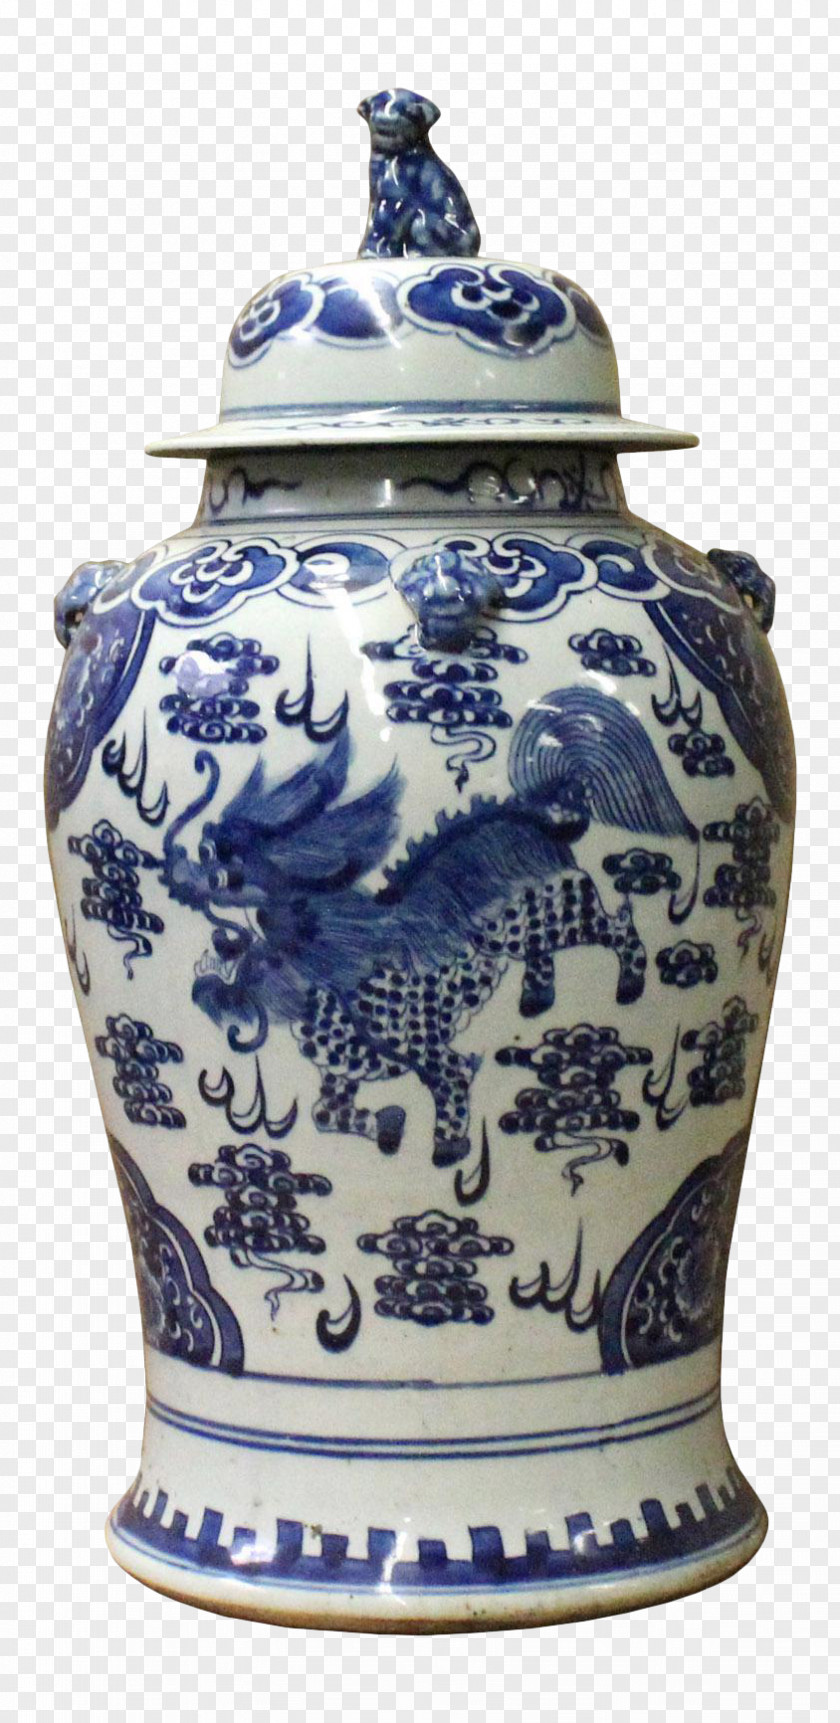 The Blue And White Porcelain Vase Ceramic Pottery Jug PNG